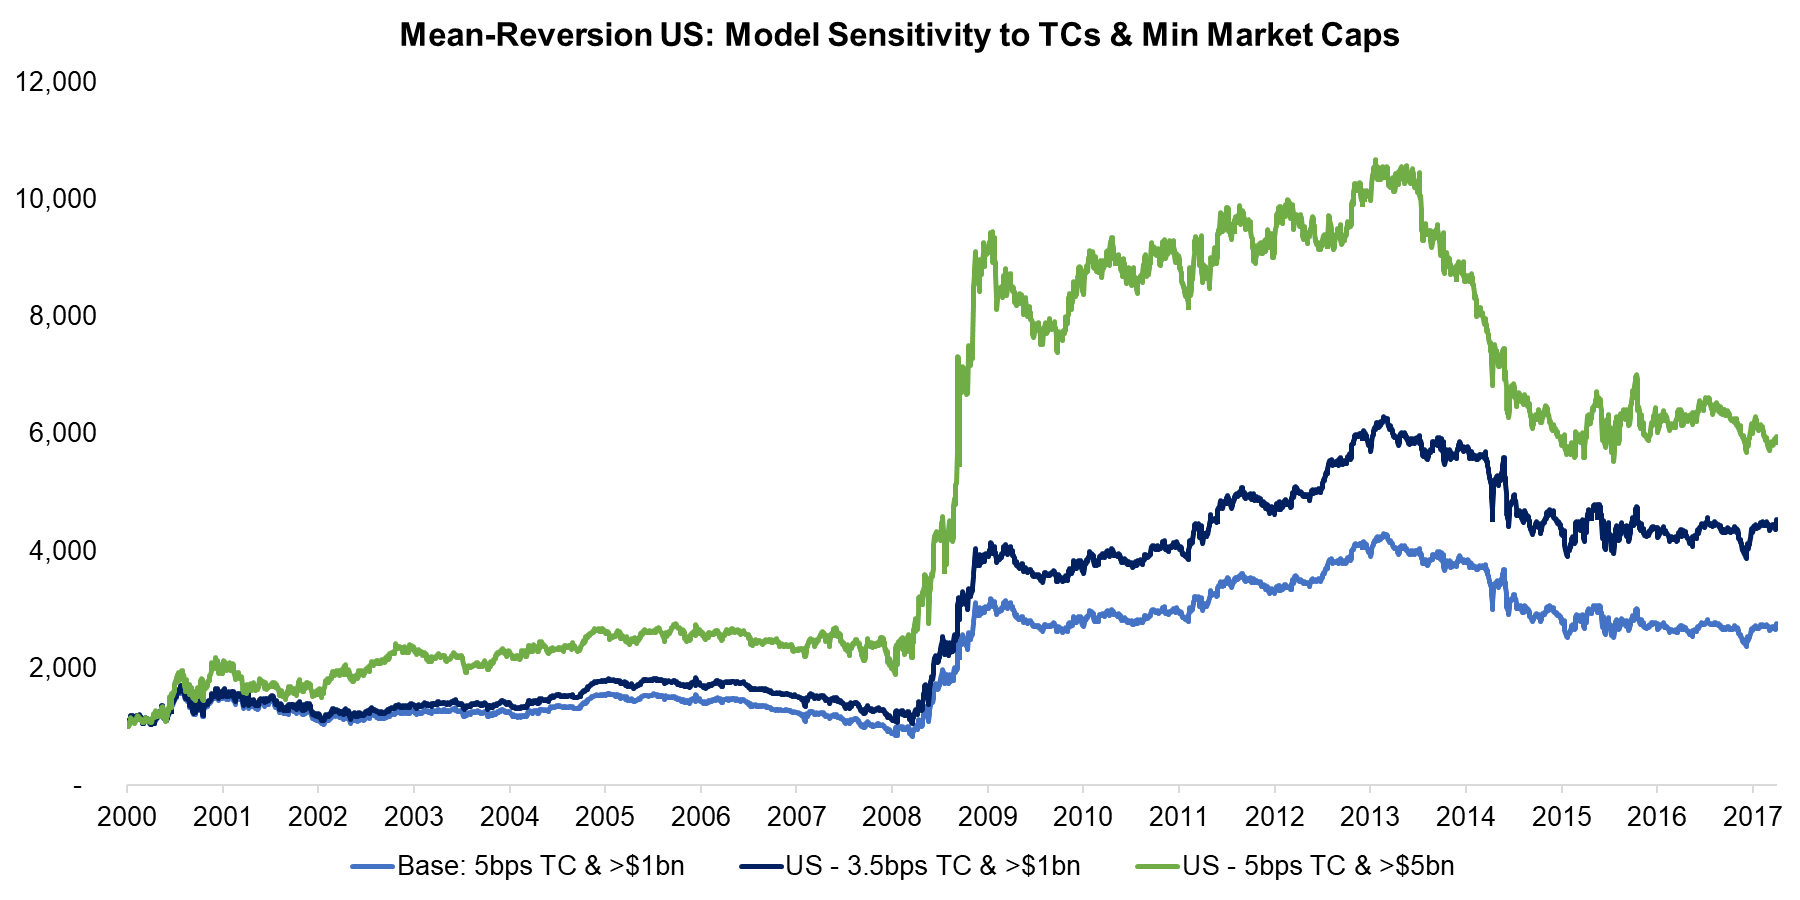 Mean-Reversion US Model Sensitivity to TCs & Min Market Caps